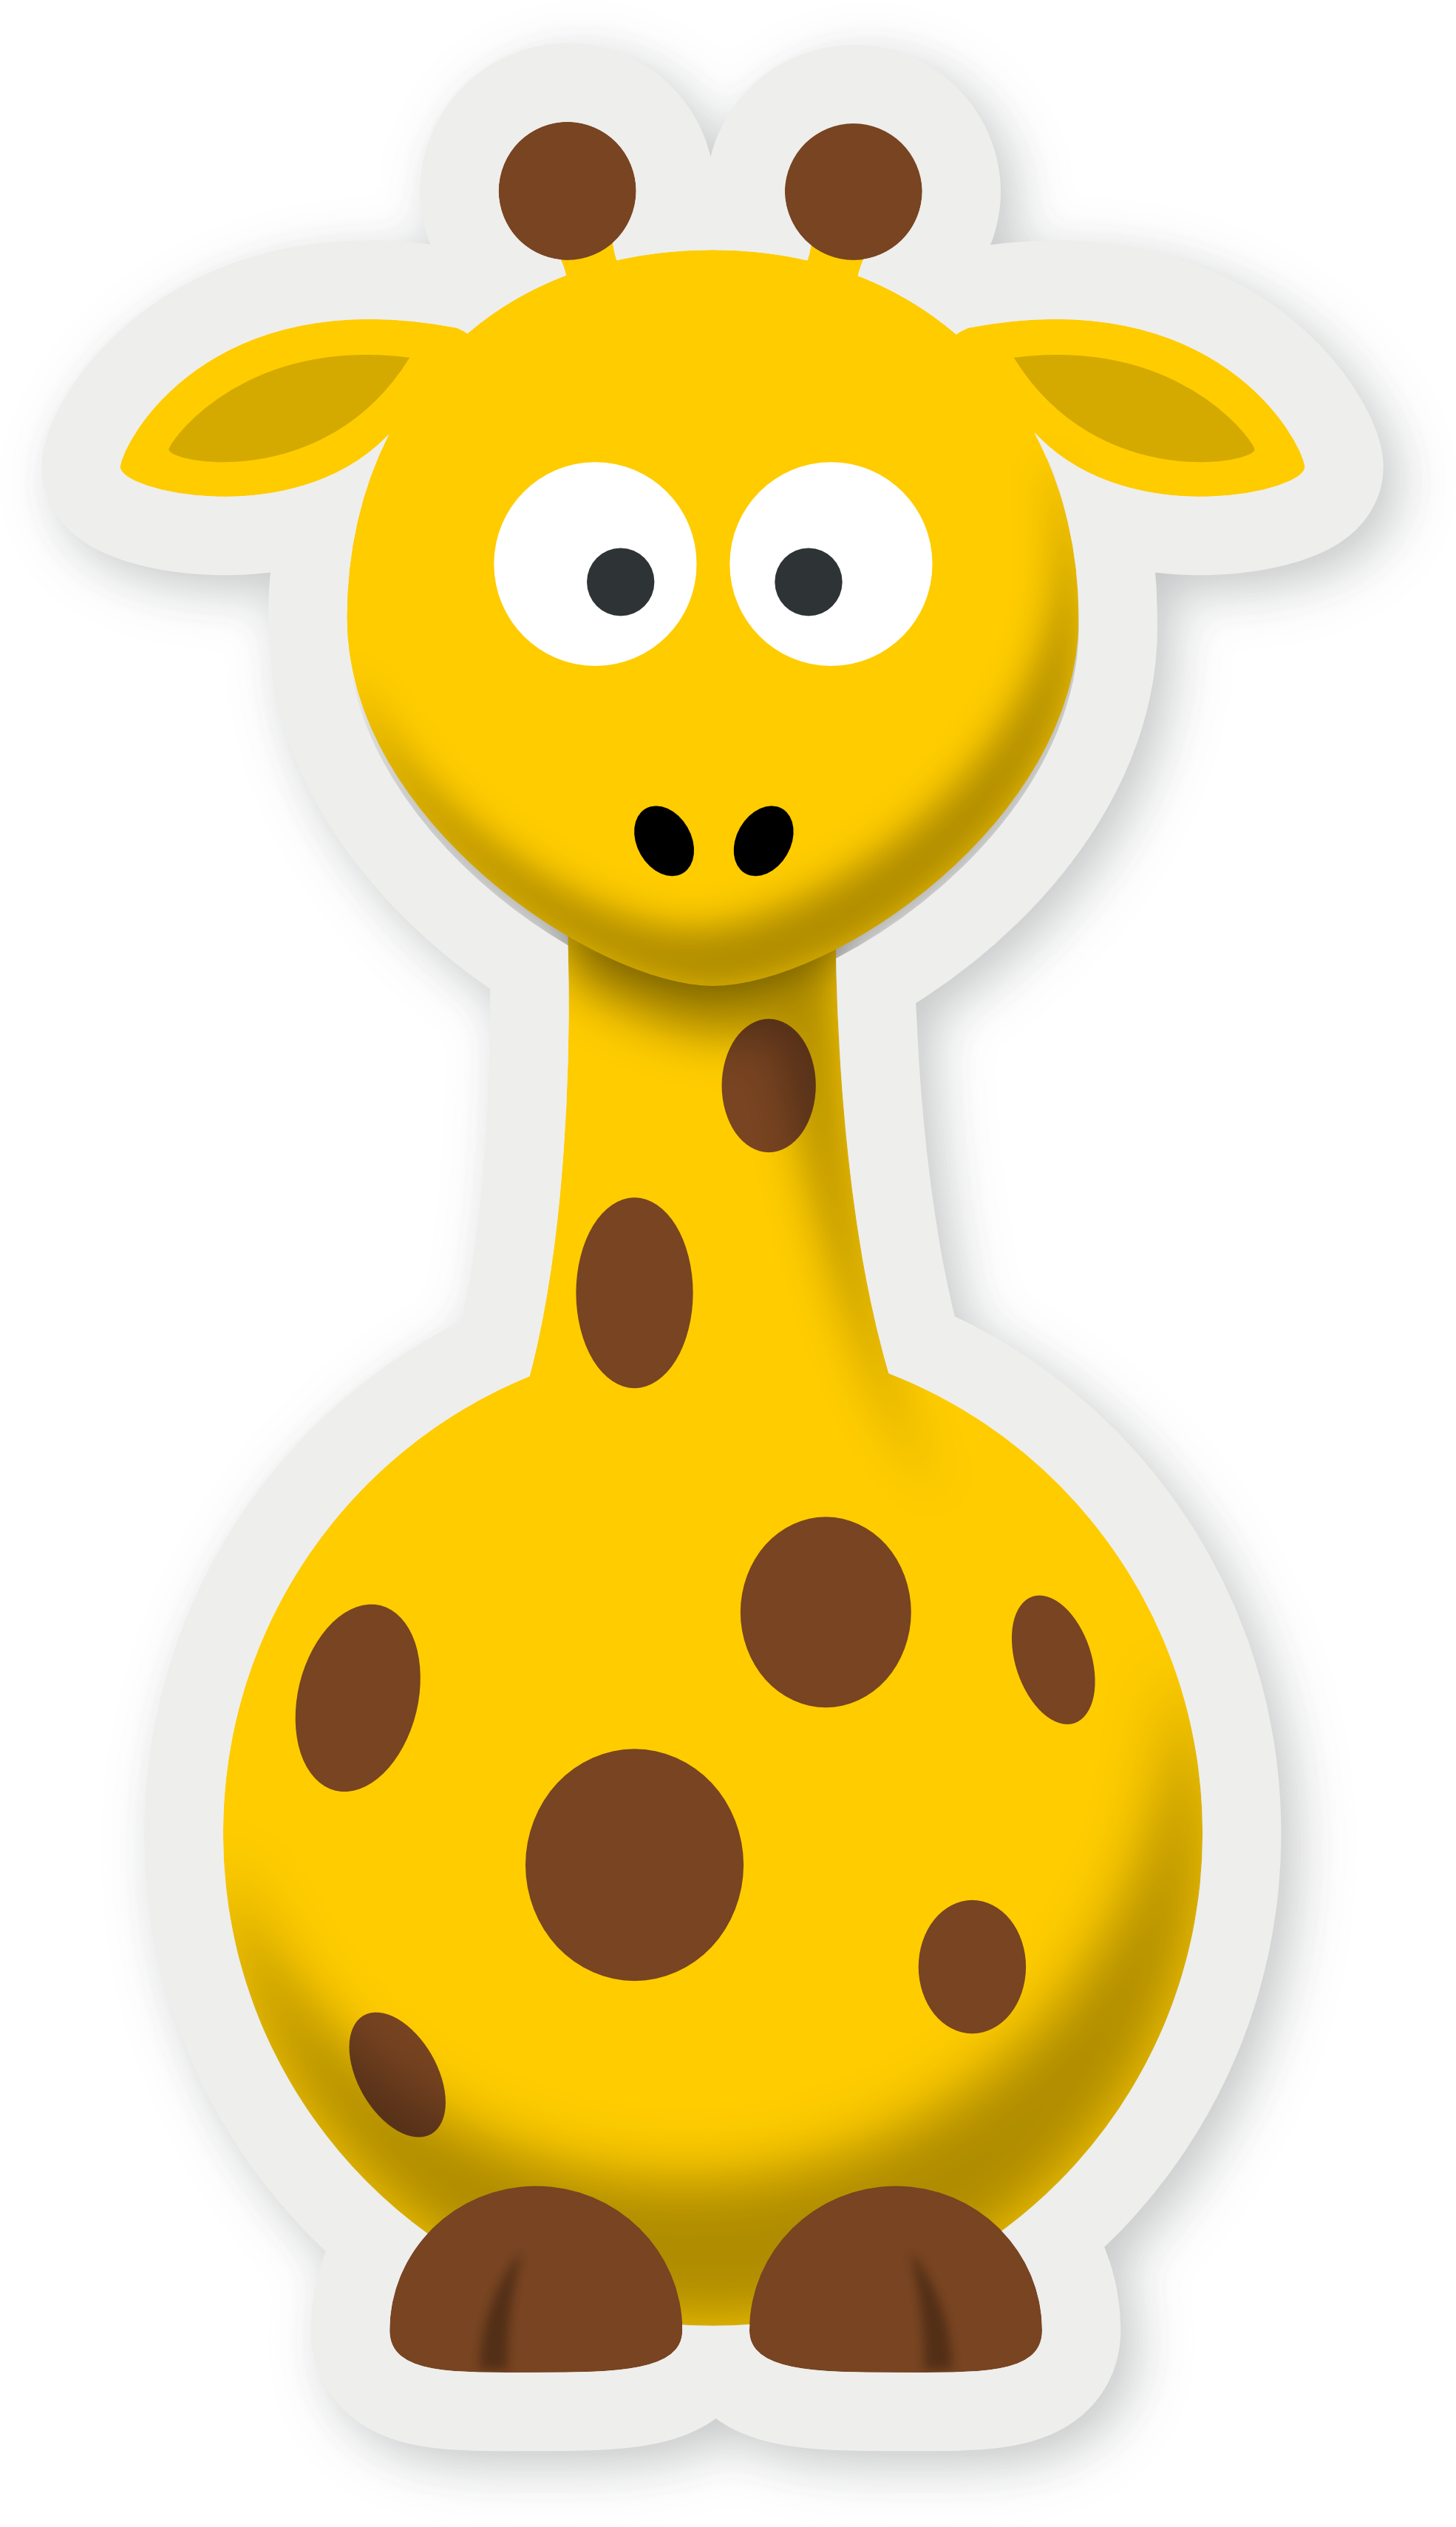 Northern giraffe Neck Zoo Animal - giraffe png download - 700*893 ...